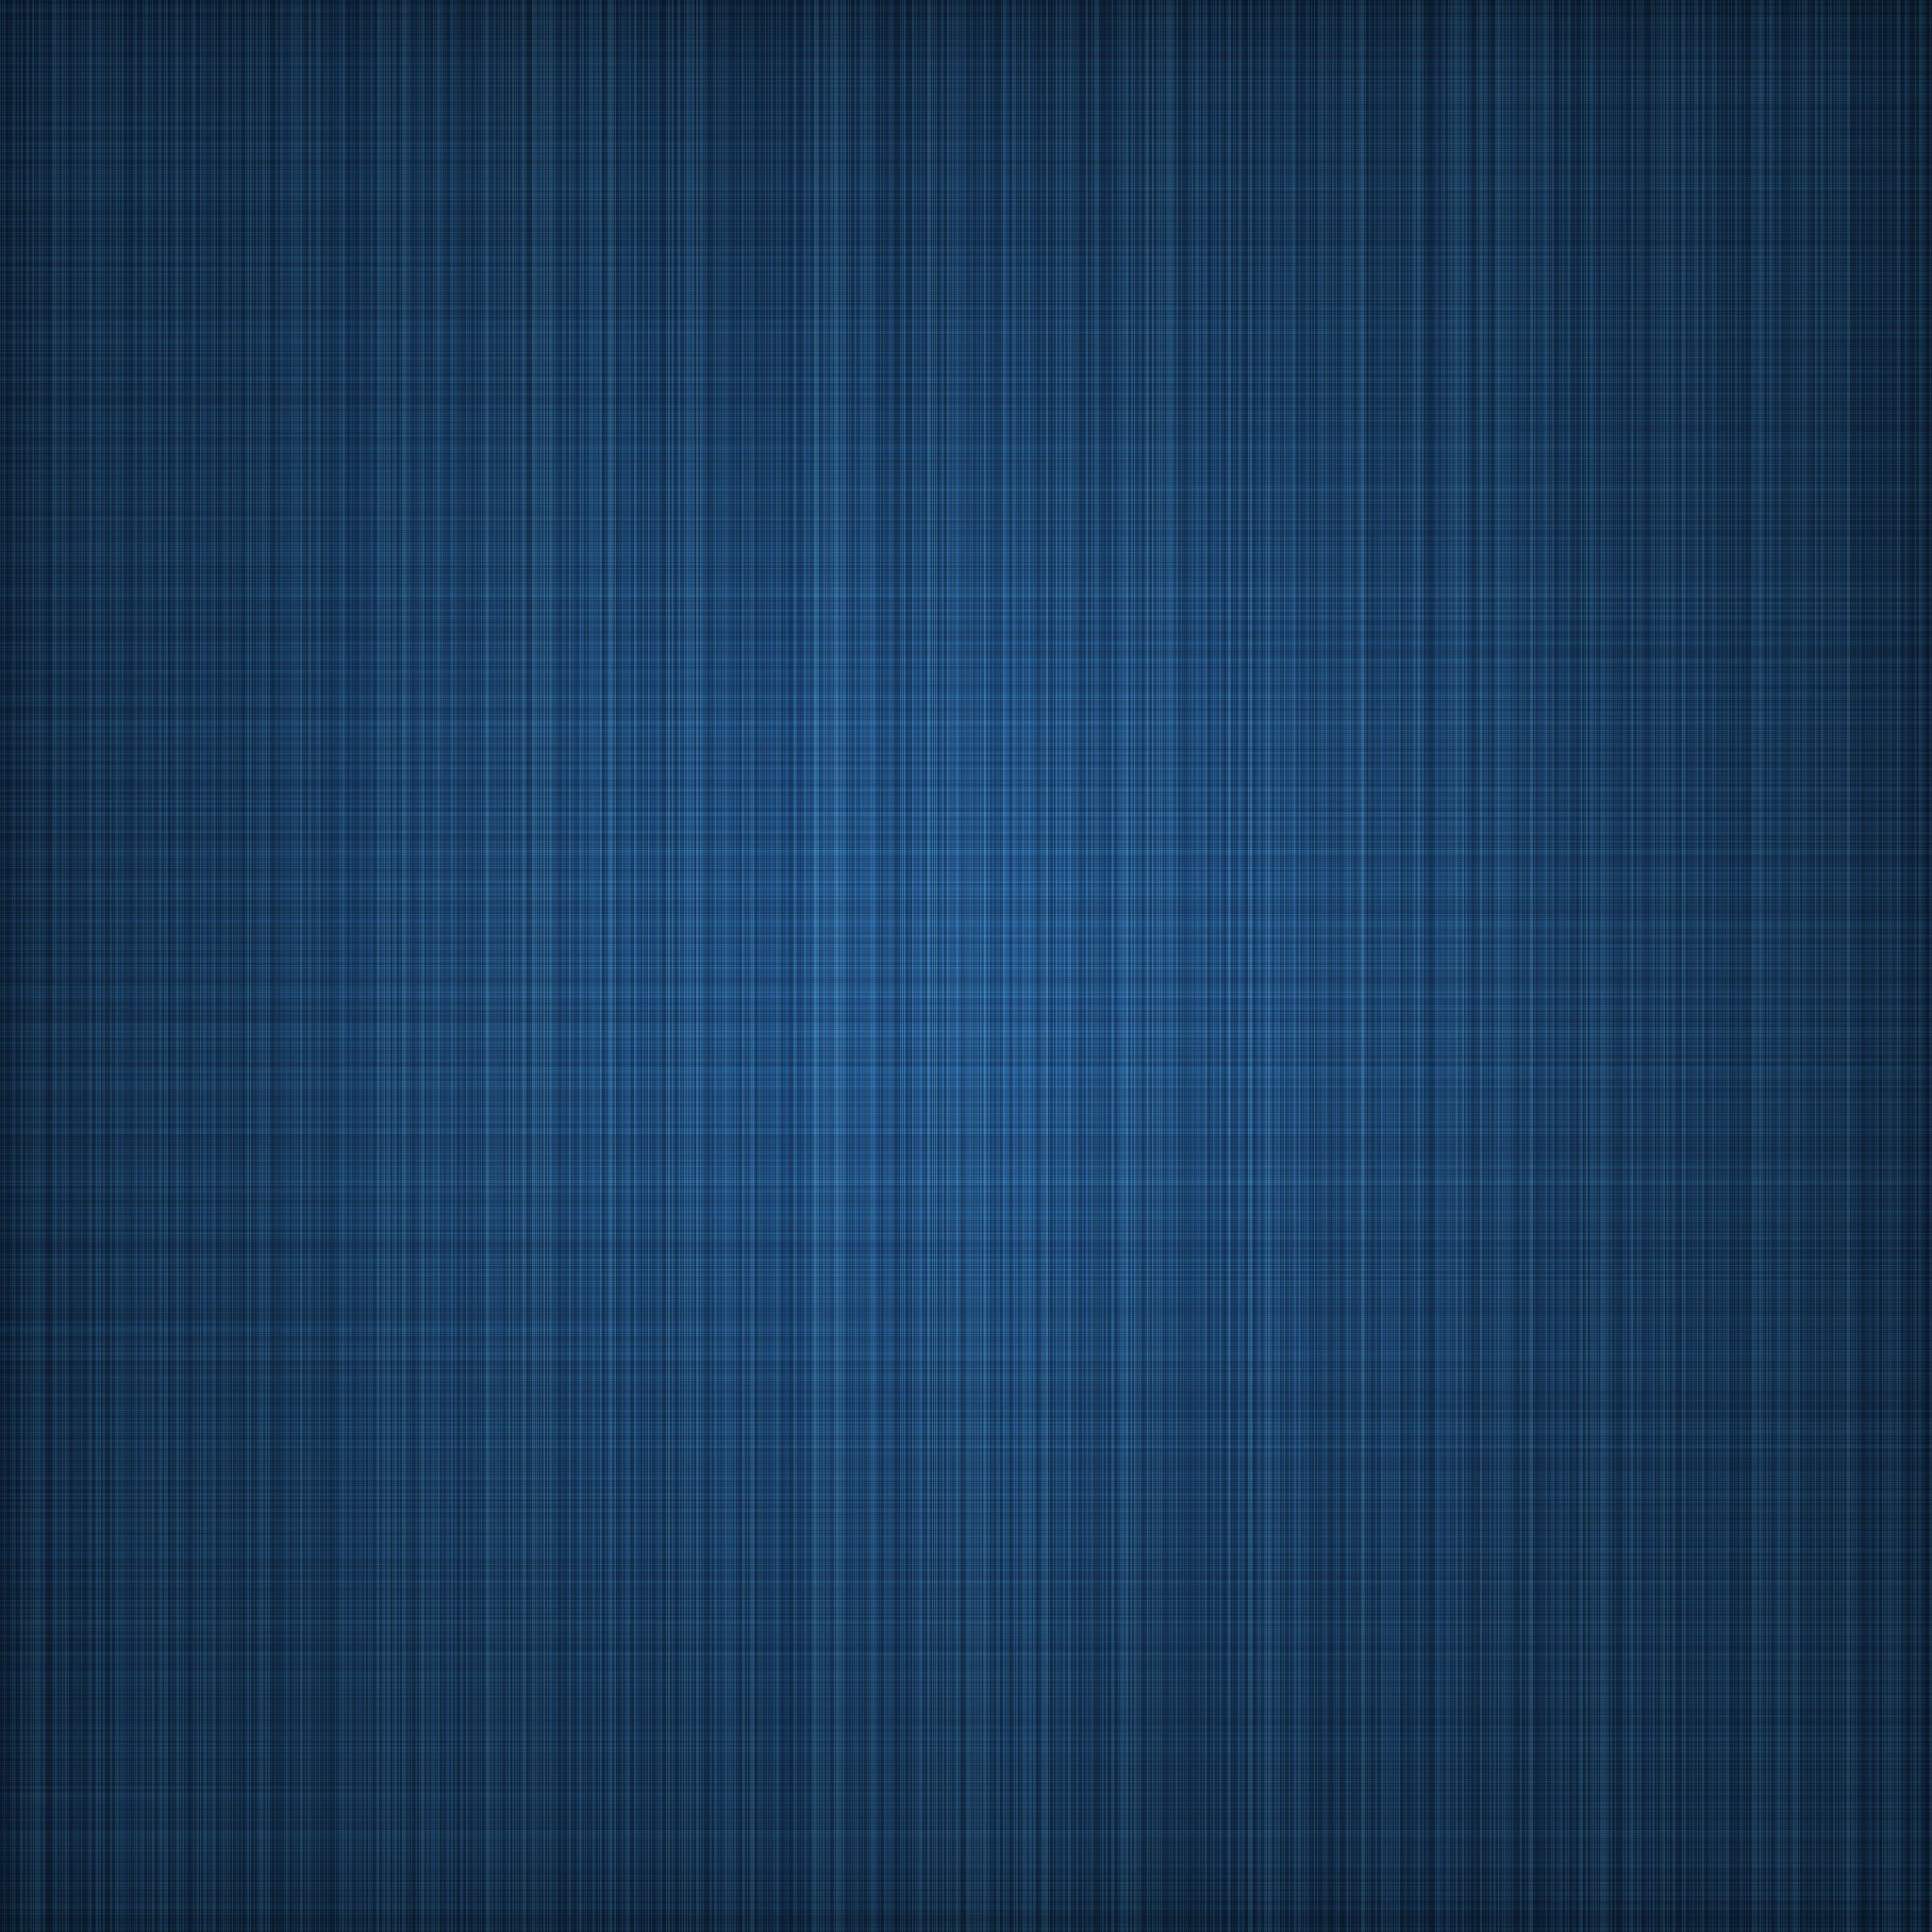 fond d'écran ipad pro,bleu,modèle,turquoise,aqua,plaid